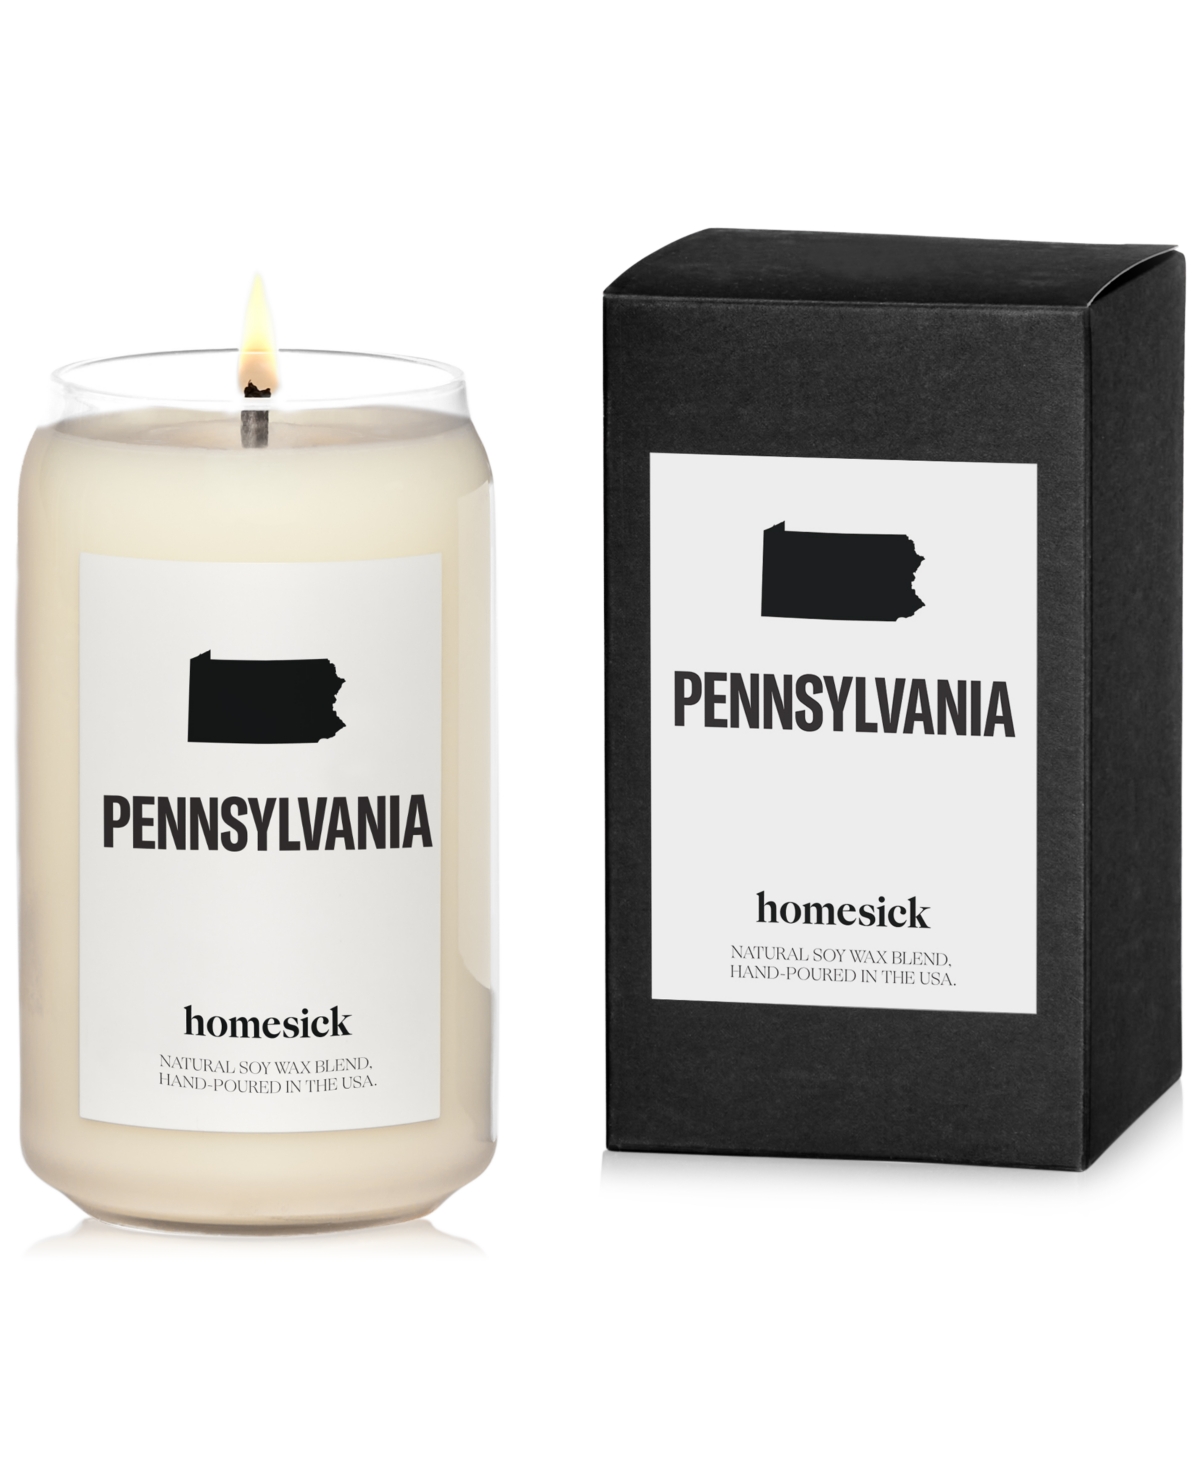 Pennsylvania Jarred Candle, 13.75-oz. - Natural